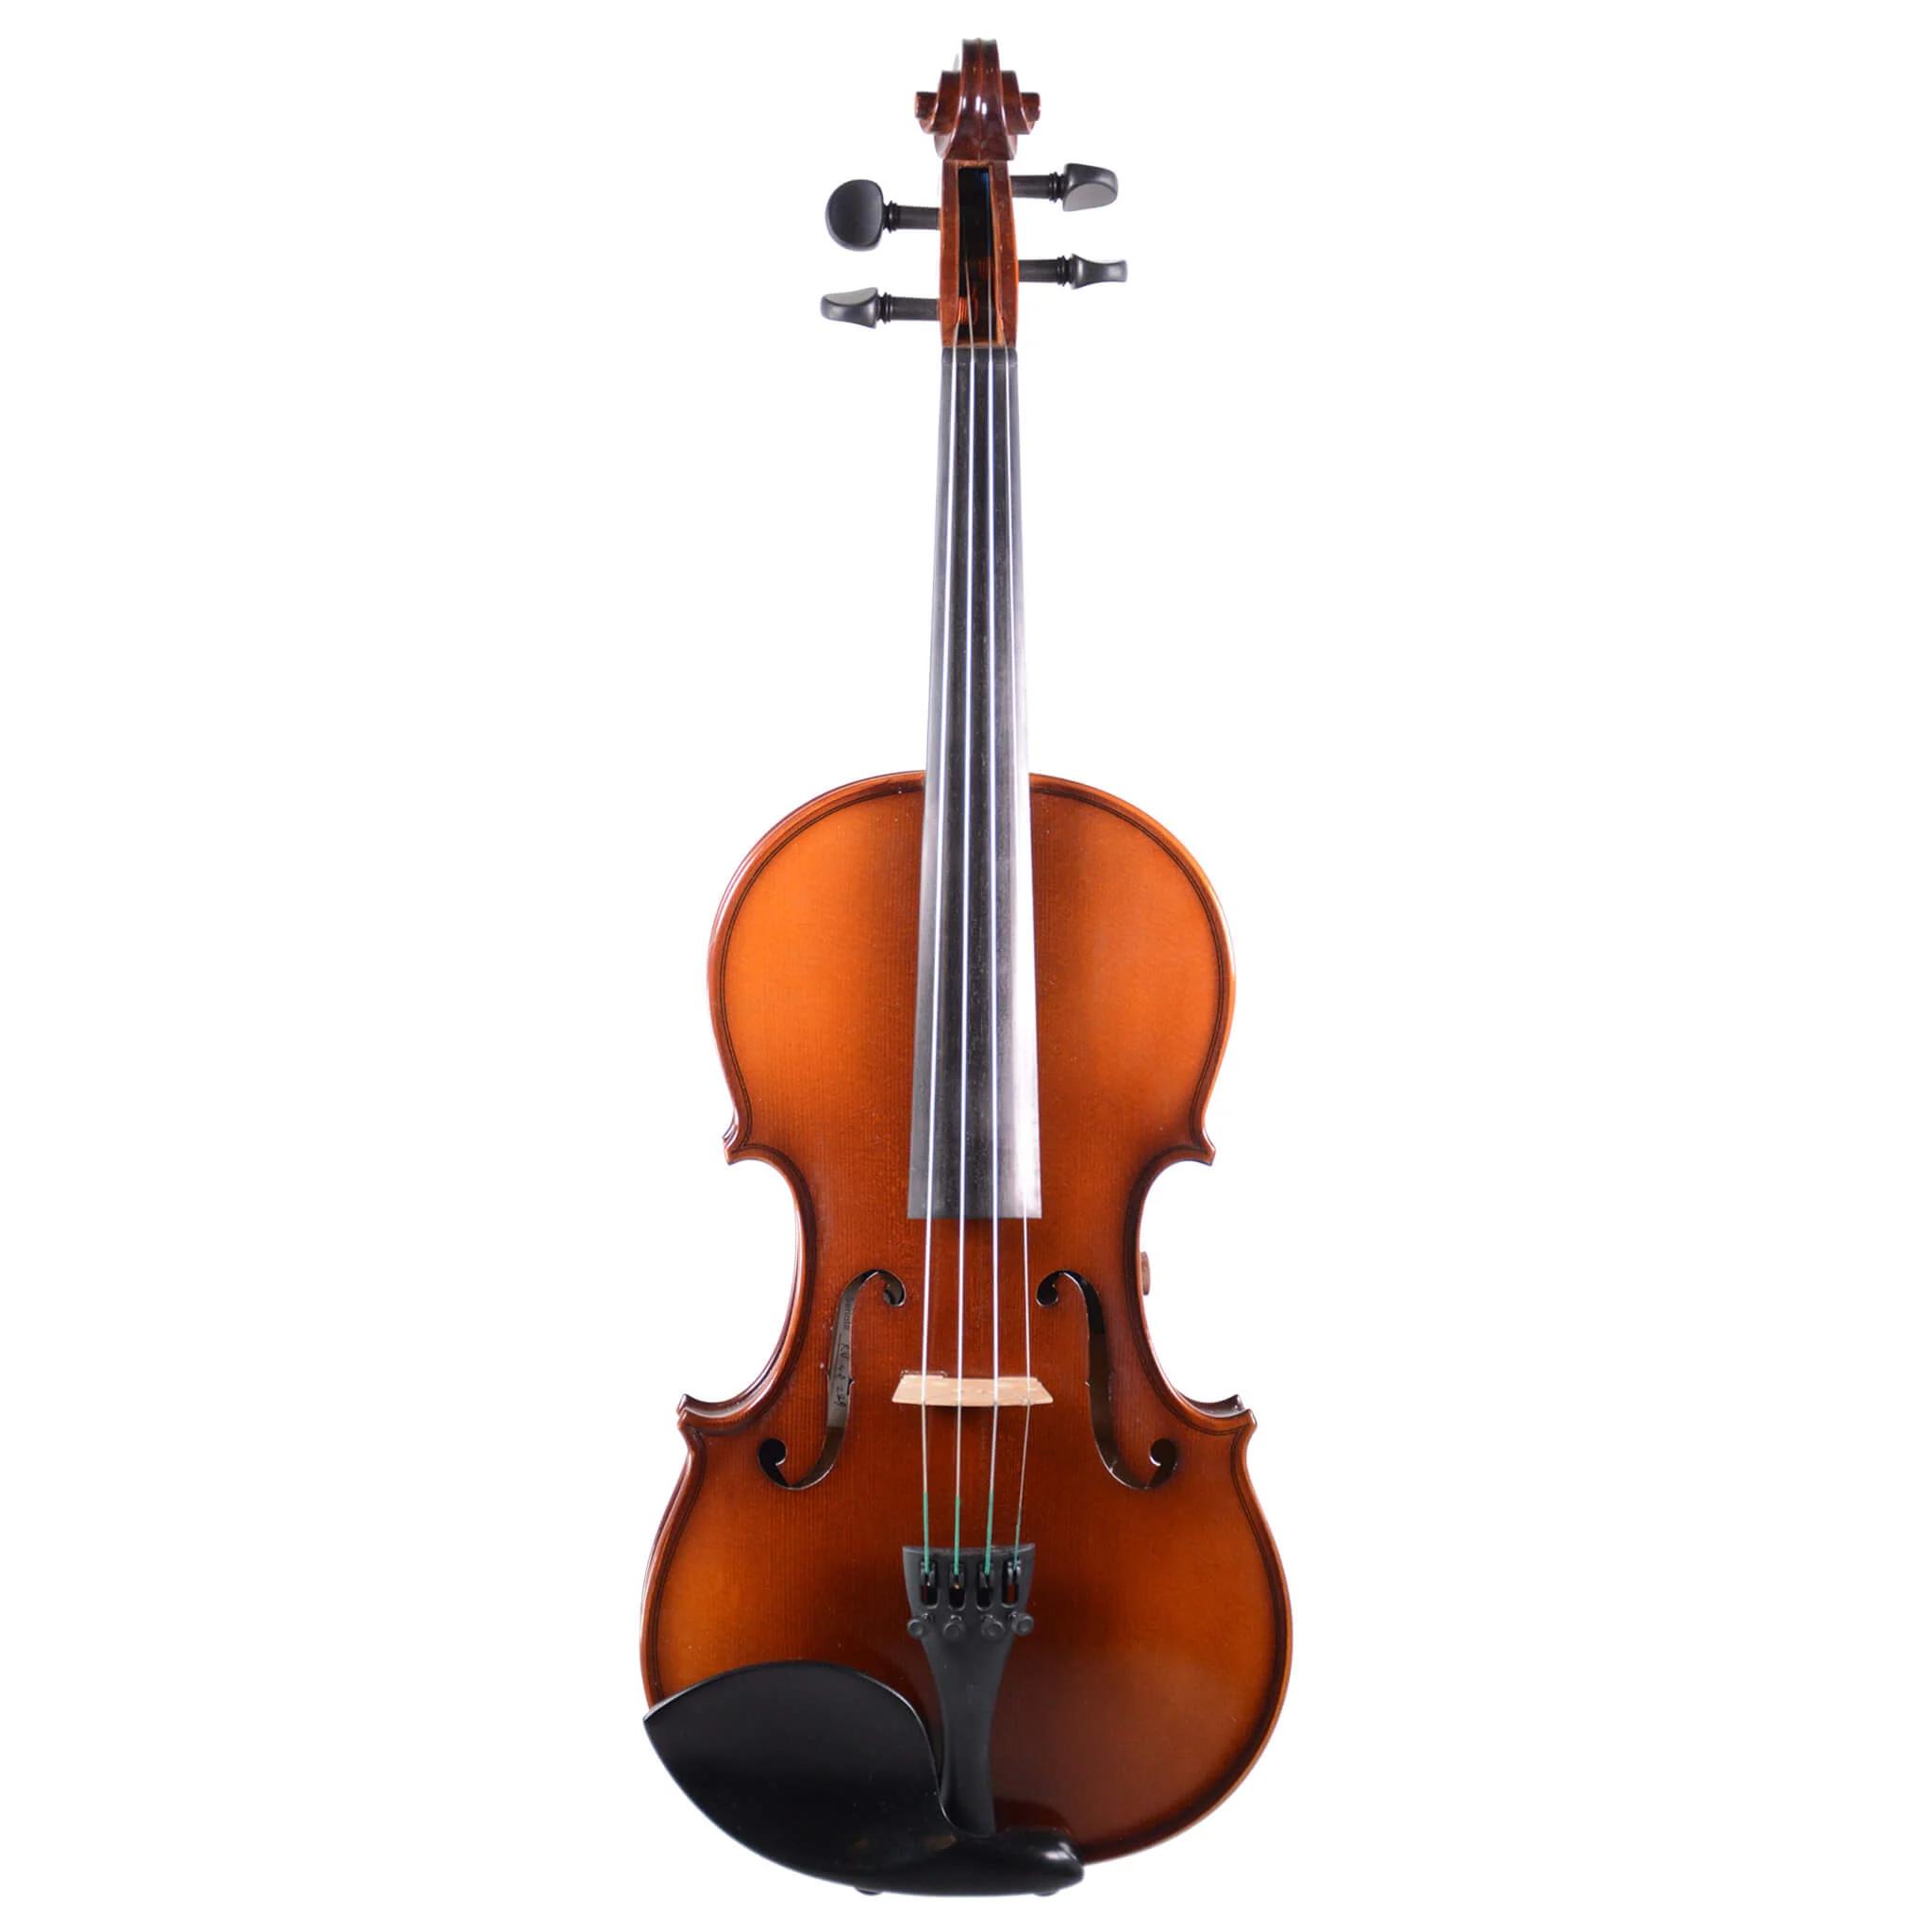 acoustic violin - How loud is an acoustic violin